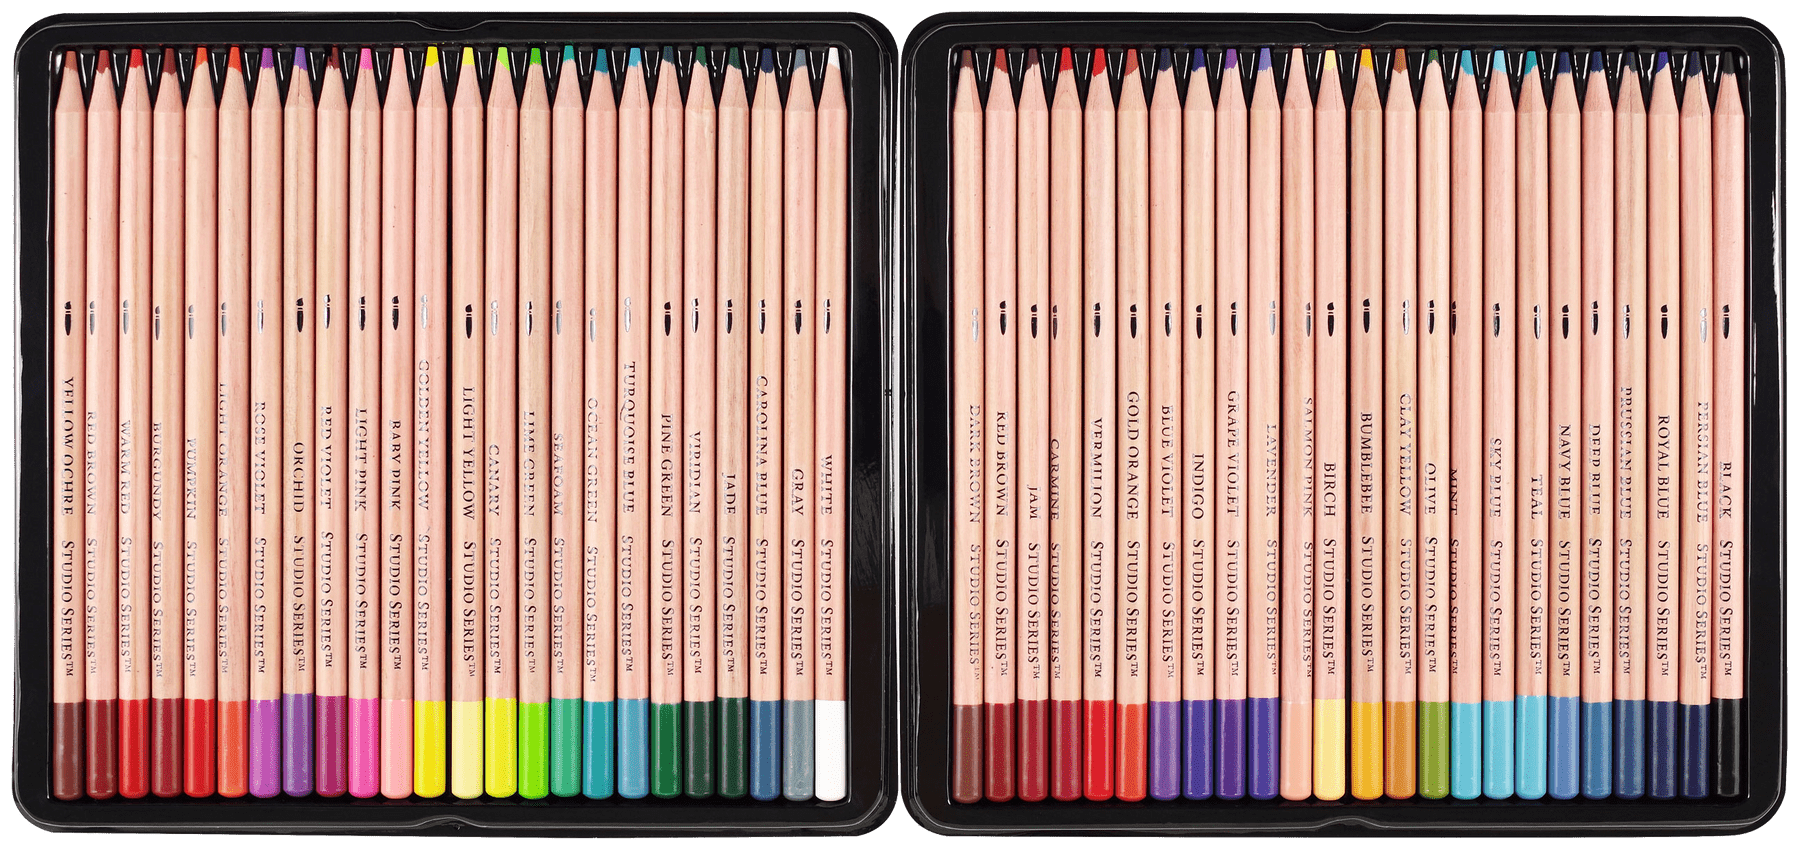 Studio Series Dual-Tip Artist's Markers - Set of 24 by Peter Pauper